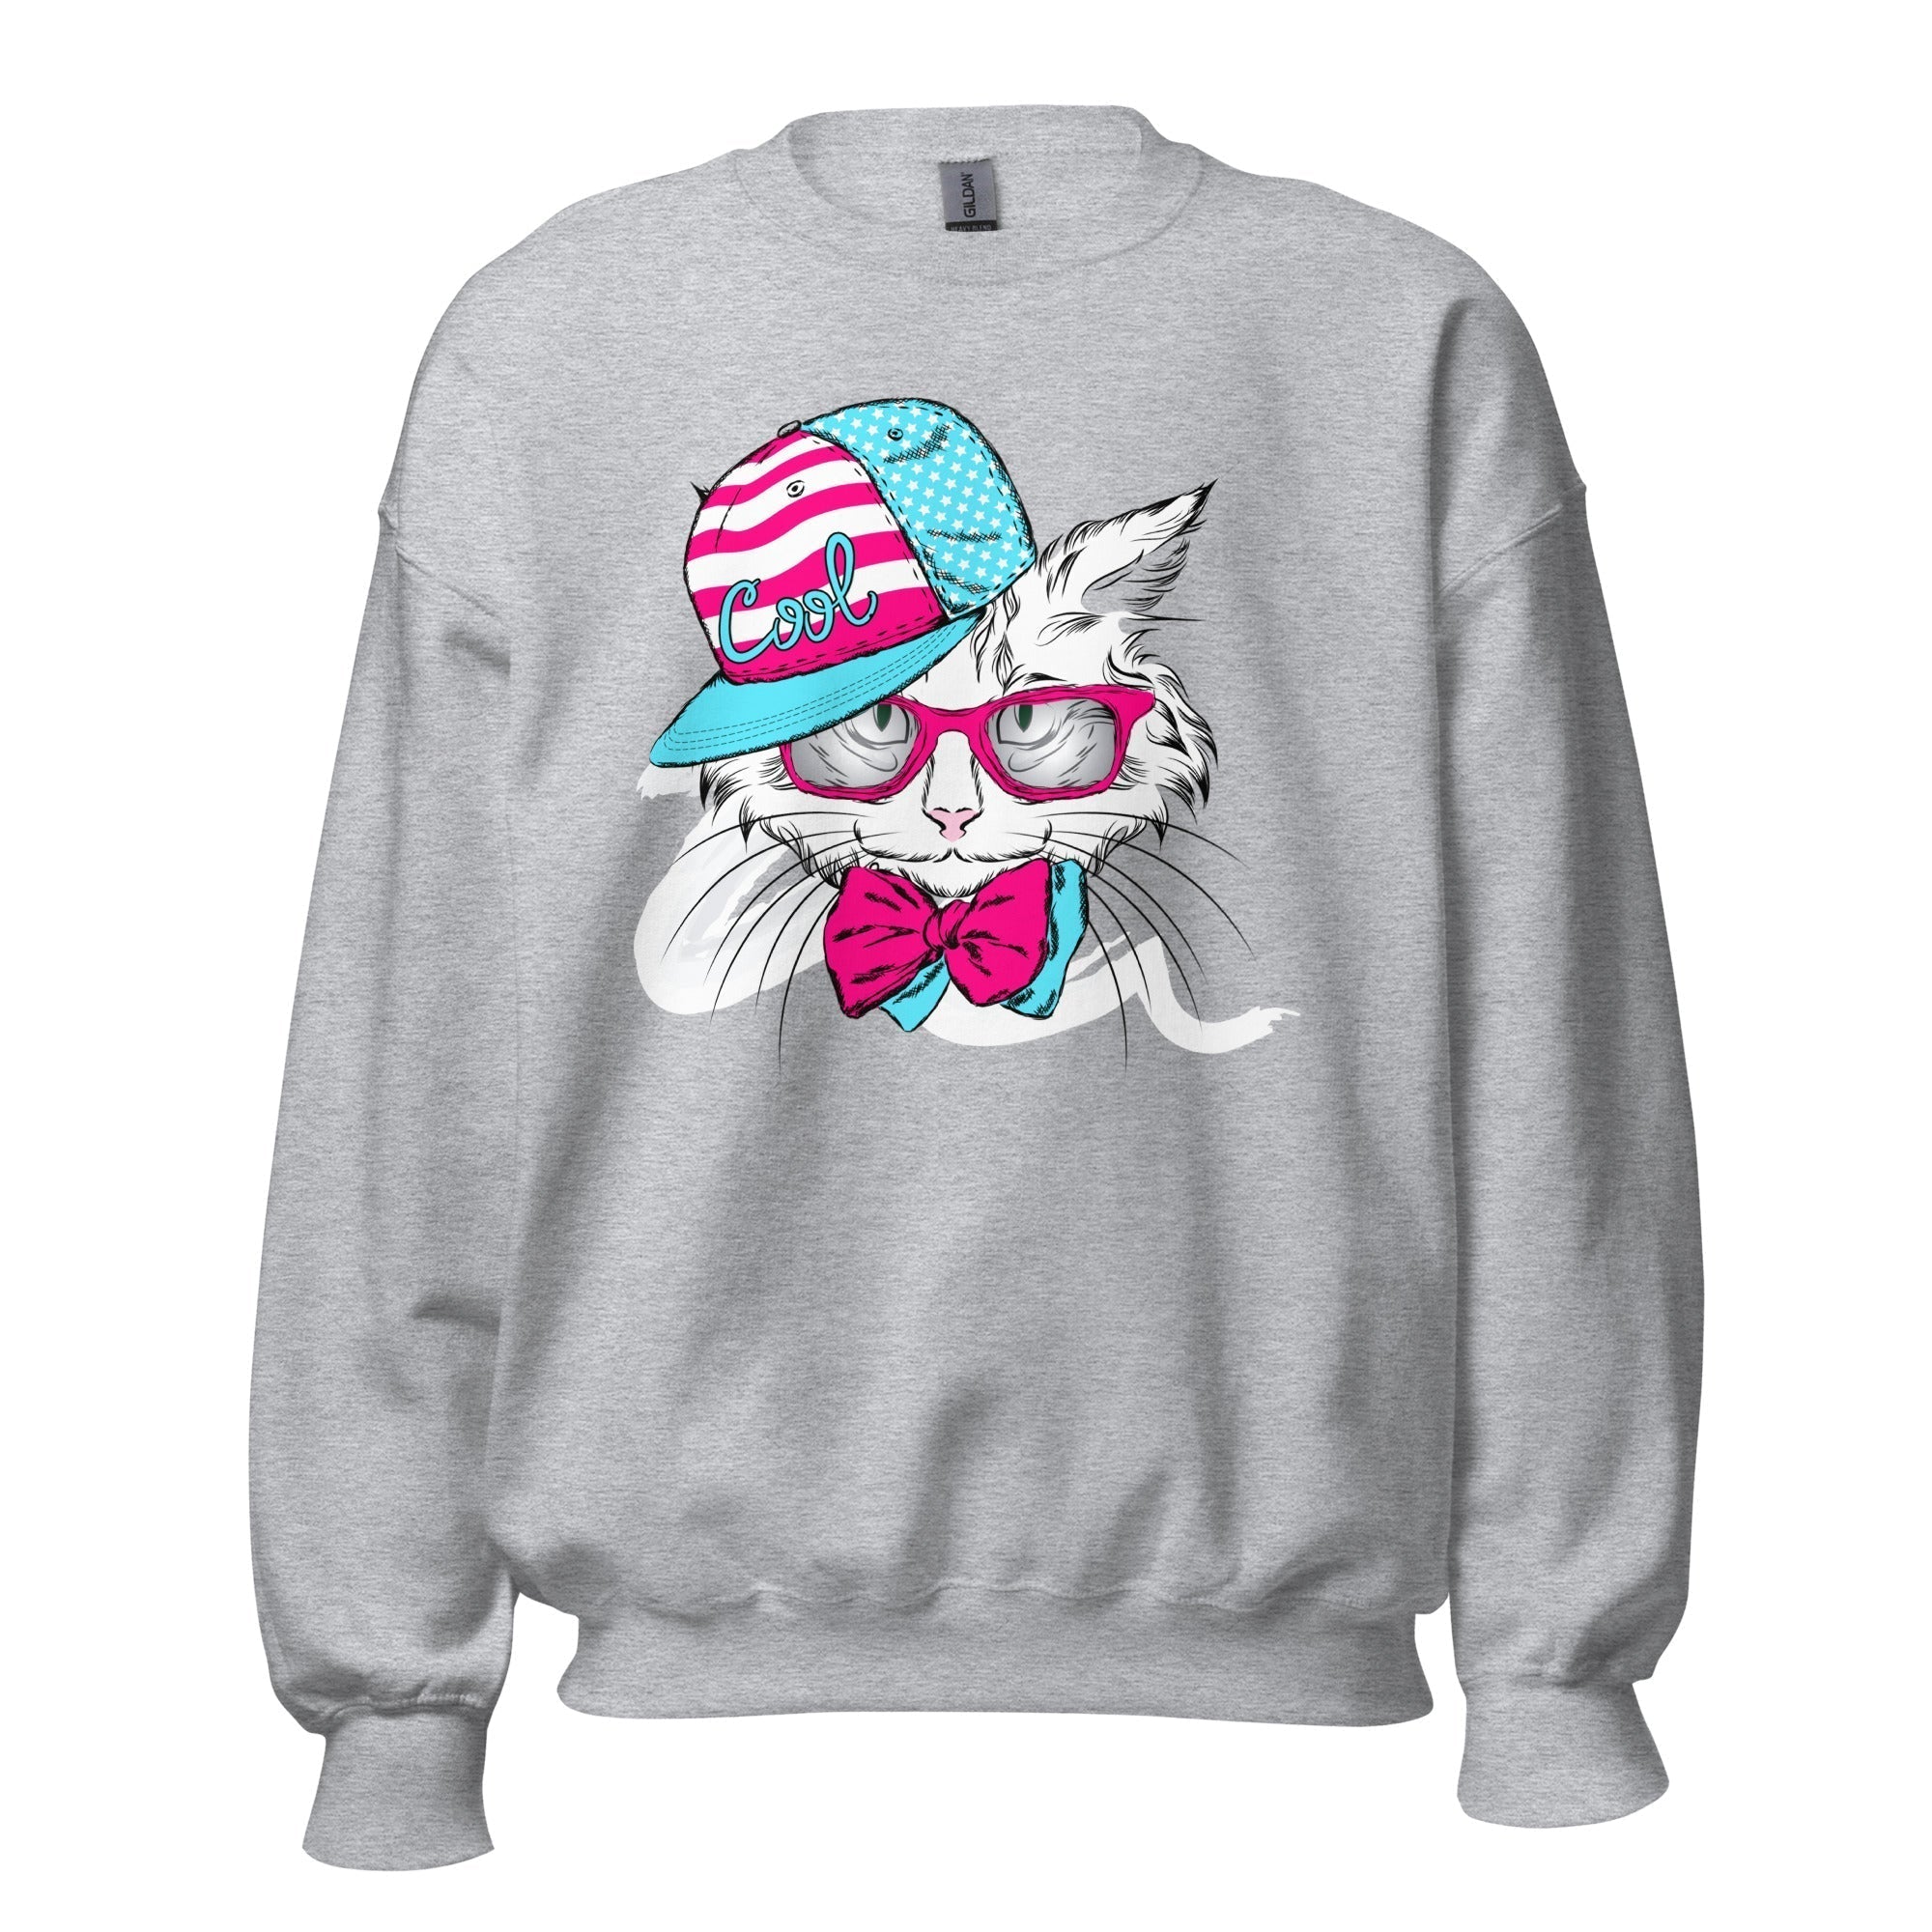 Unisex Crew Neck Sweatshirt - Cool Cat - GRAPHIC T-SHIRTS